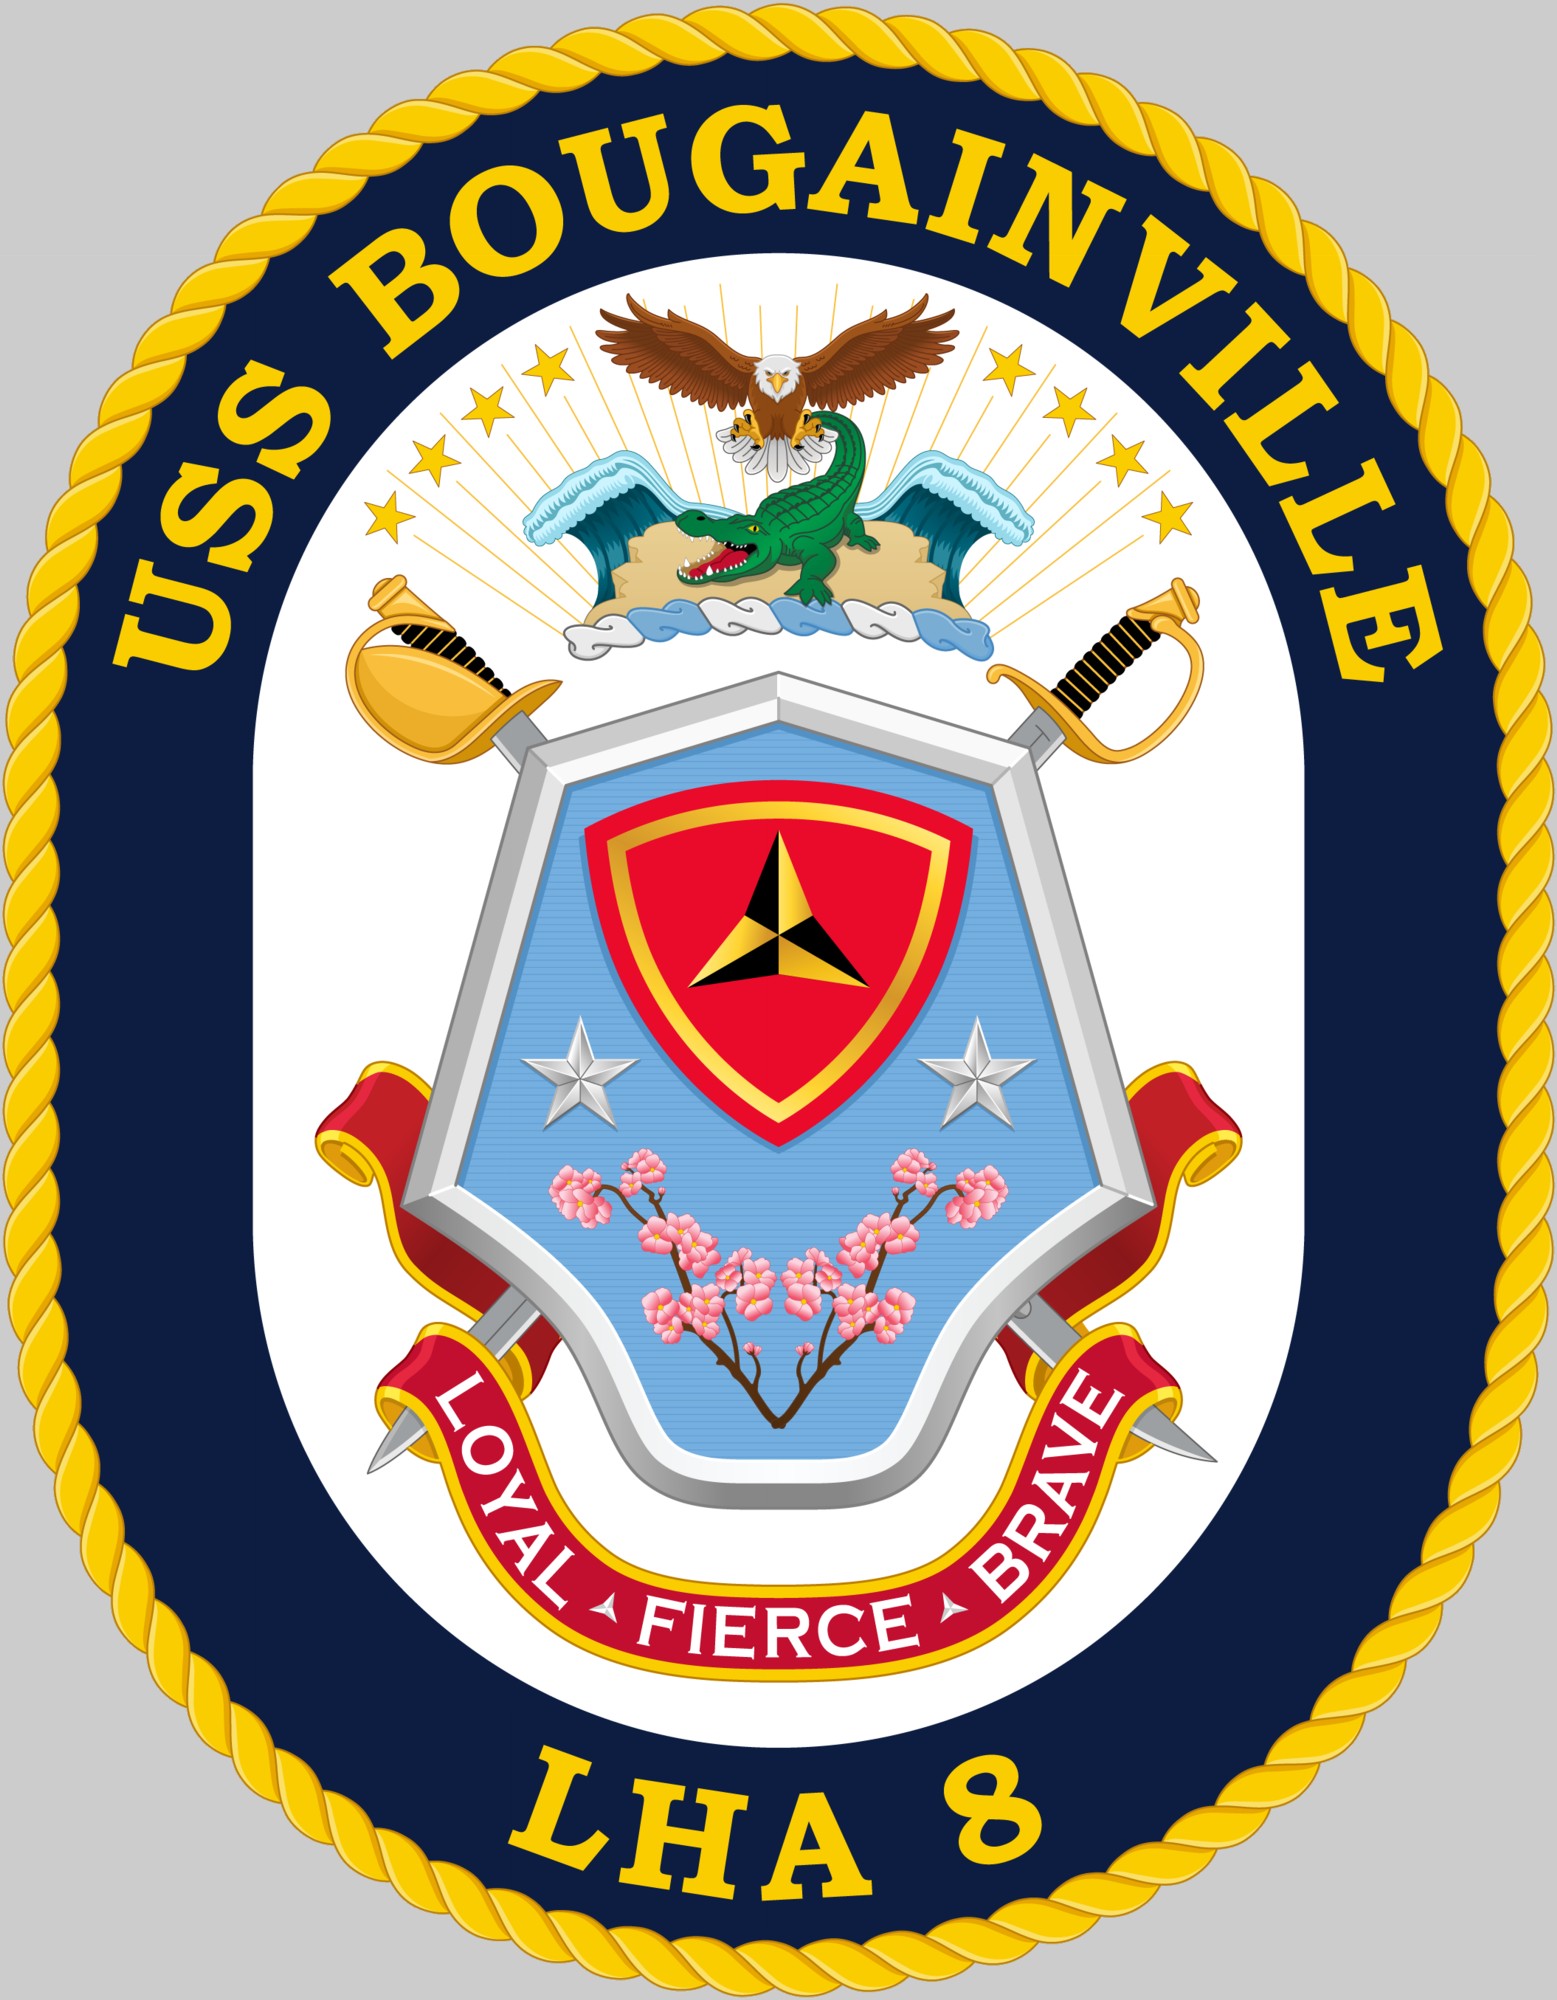 lha-8 uss bougainville insignia crest patch badge amphibious assault ship us navy 02x